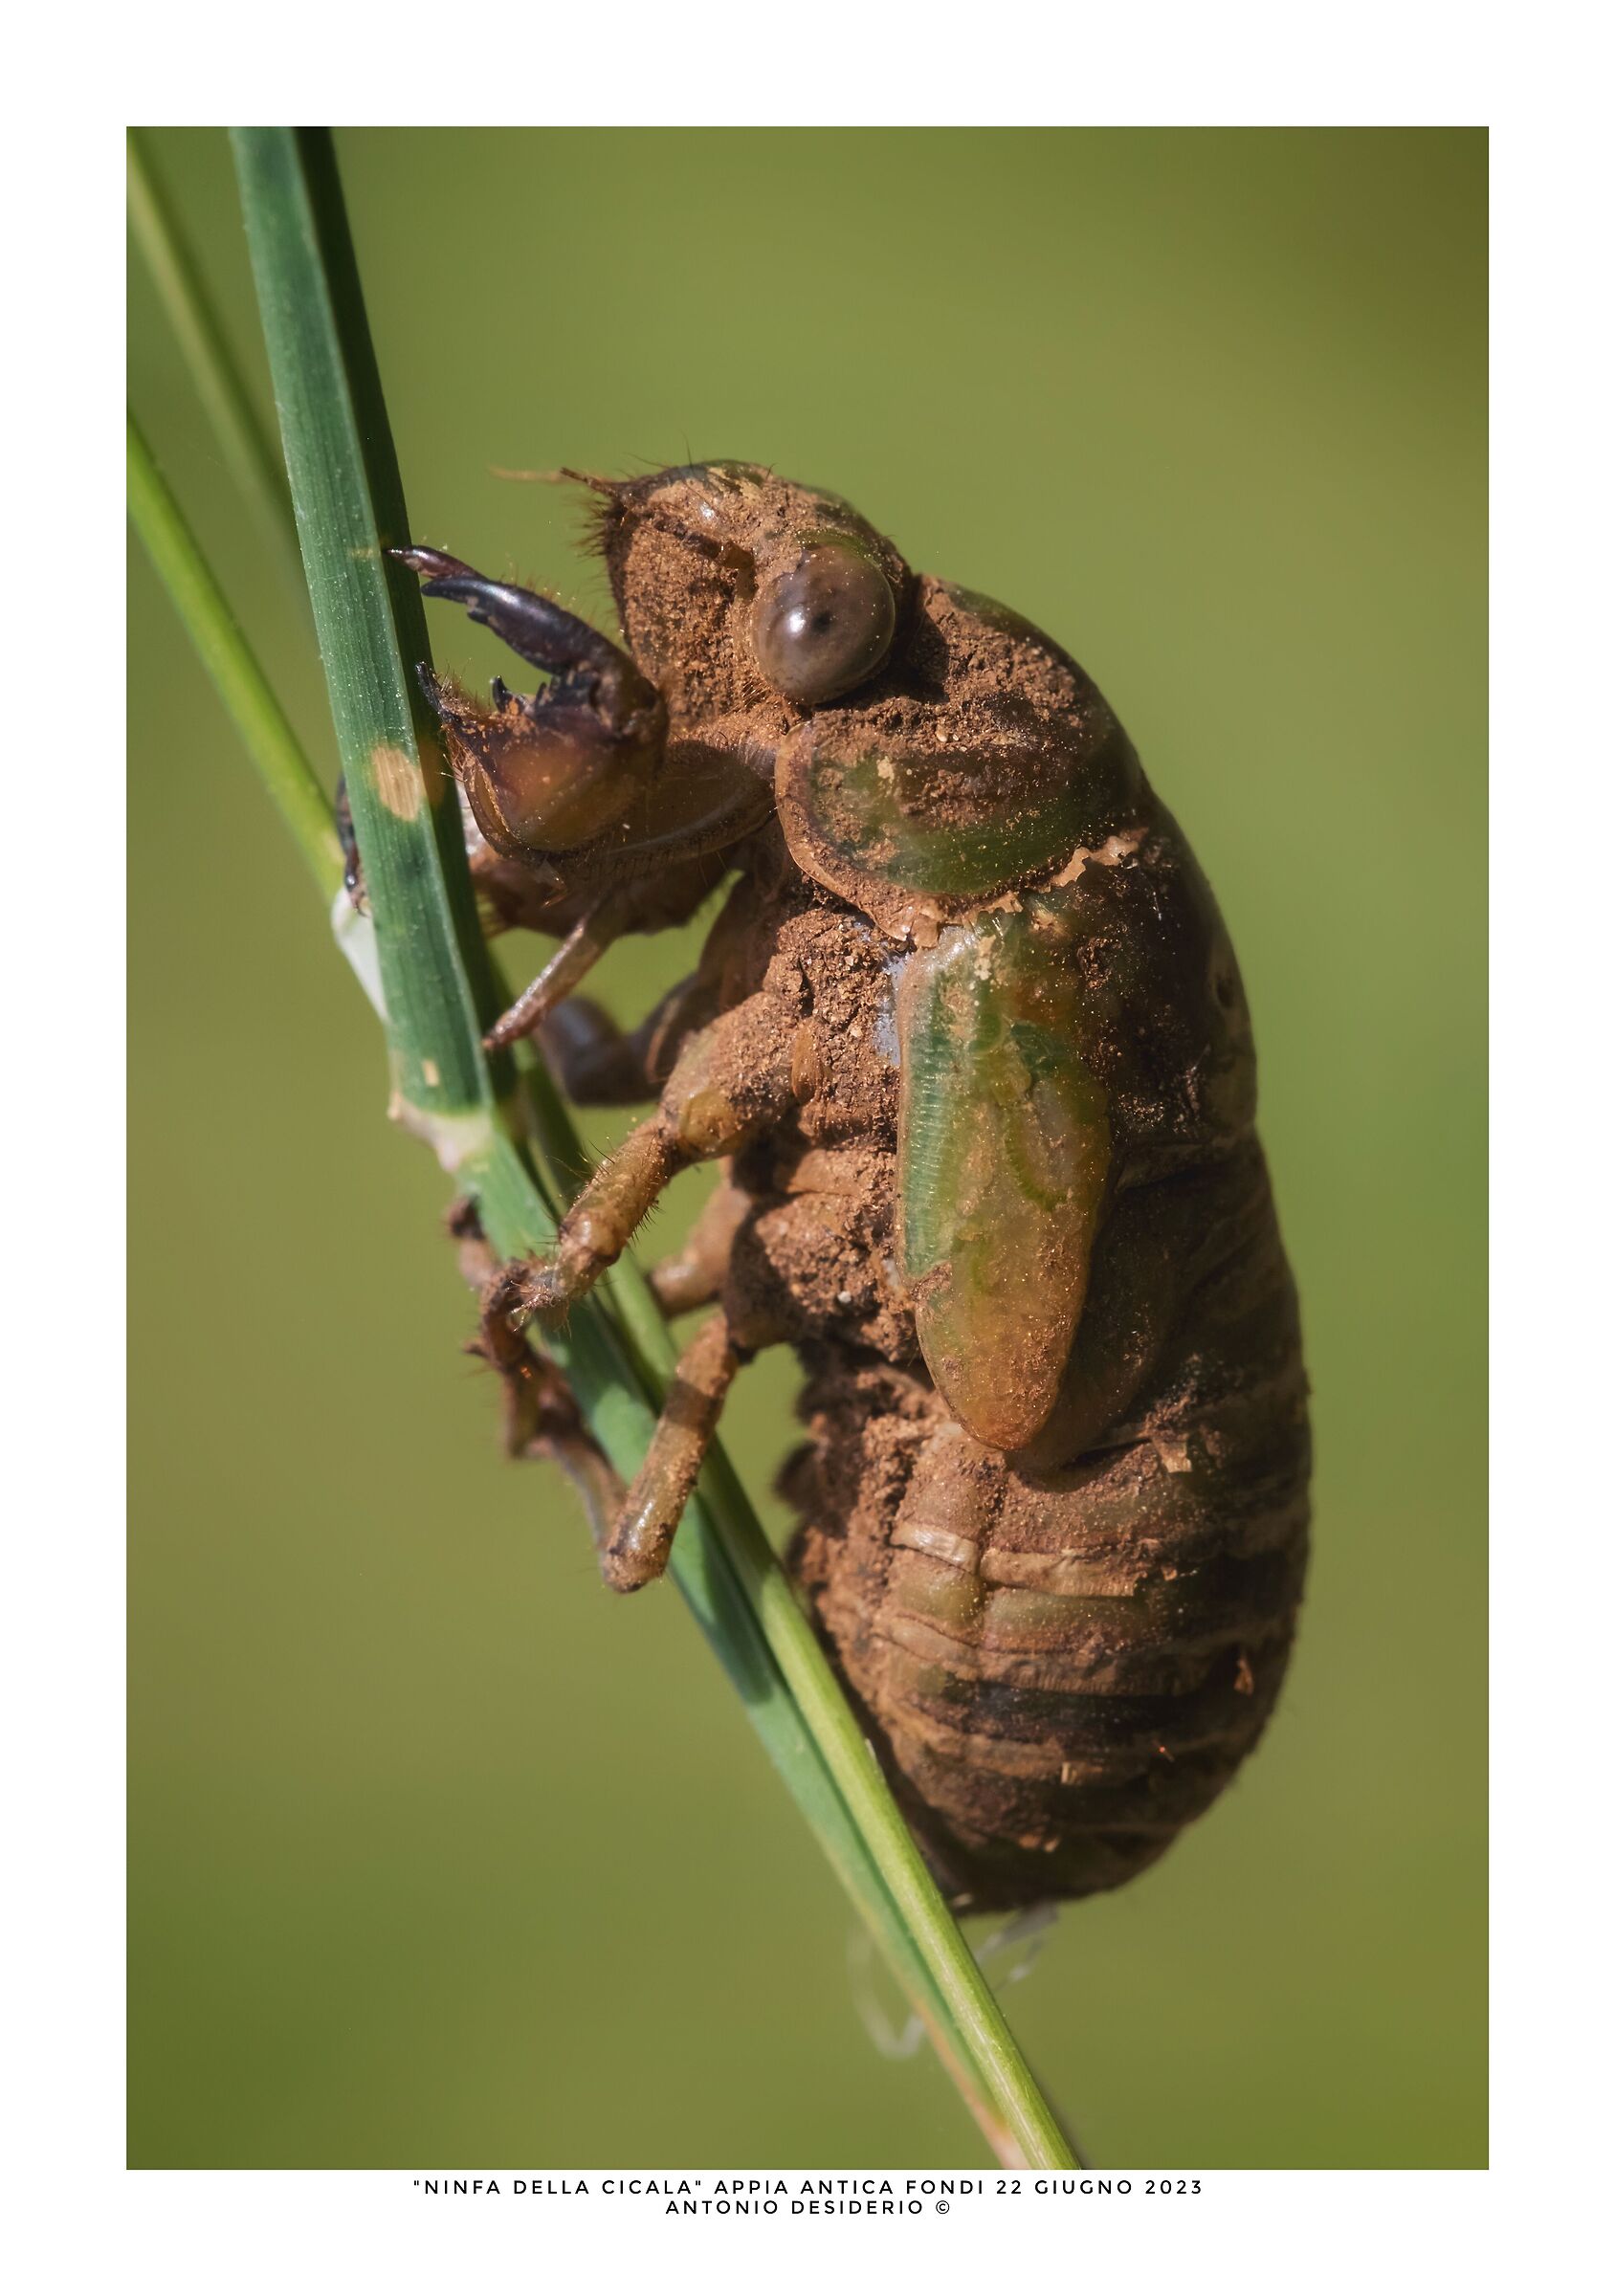 Cicada nymph...